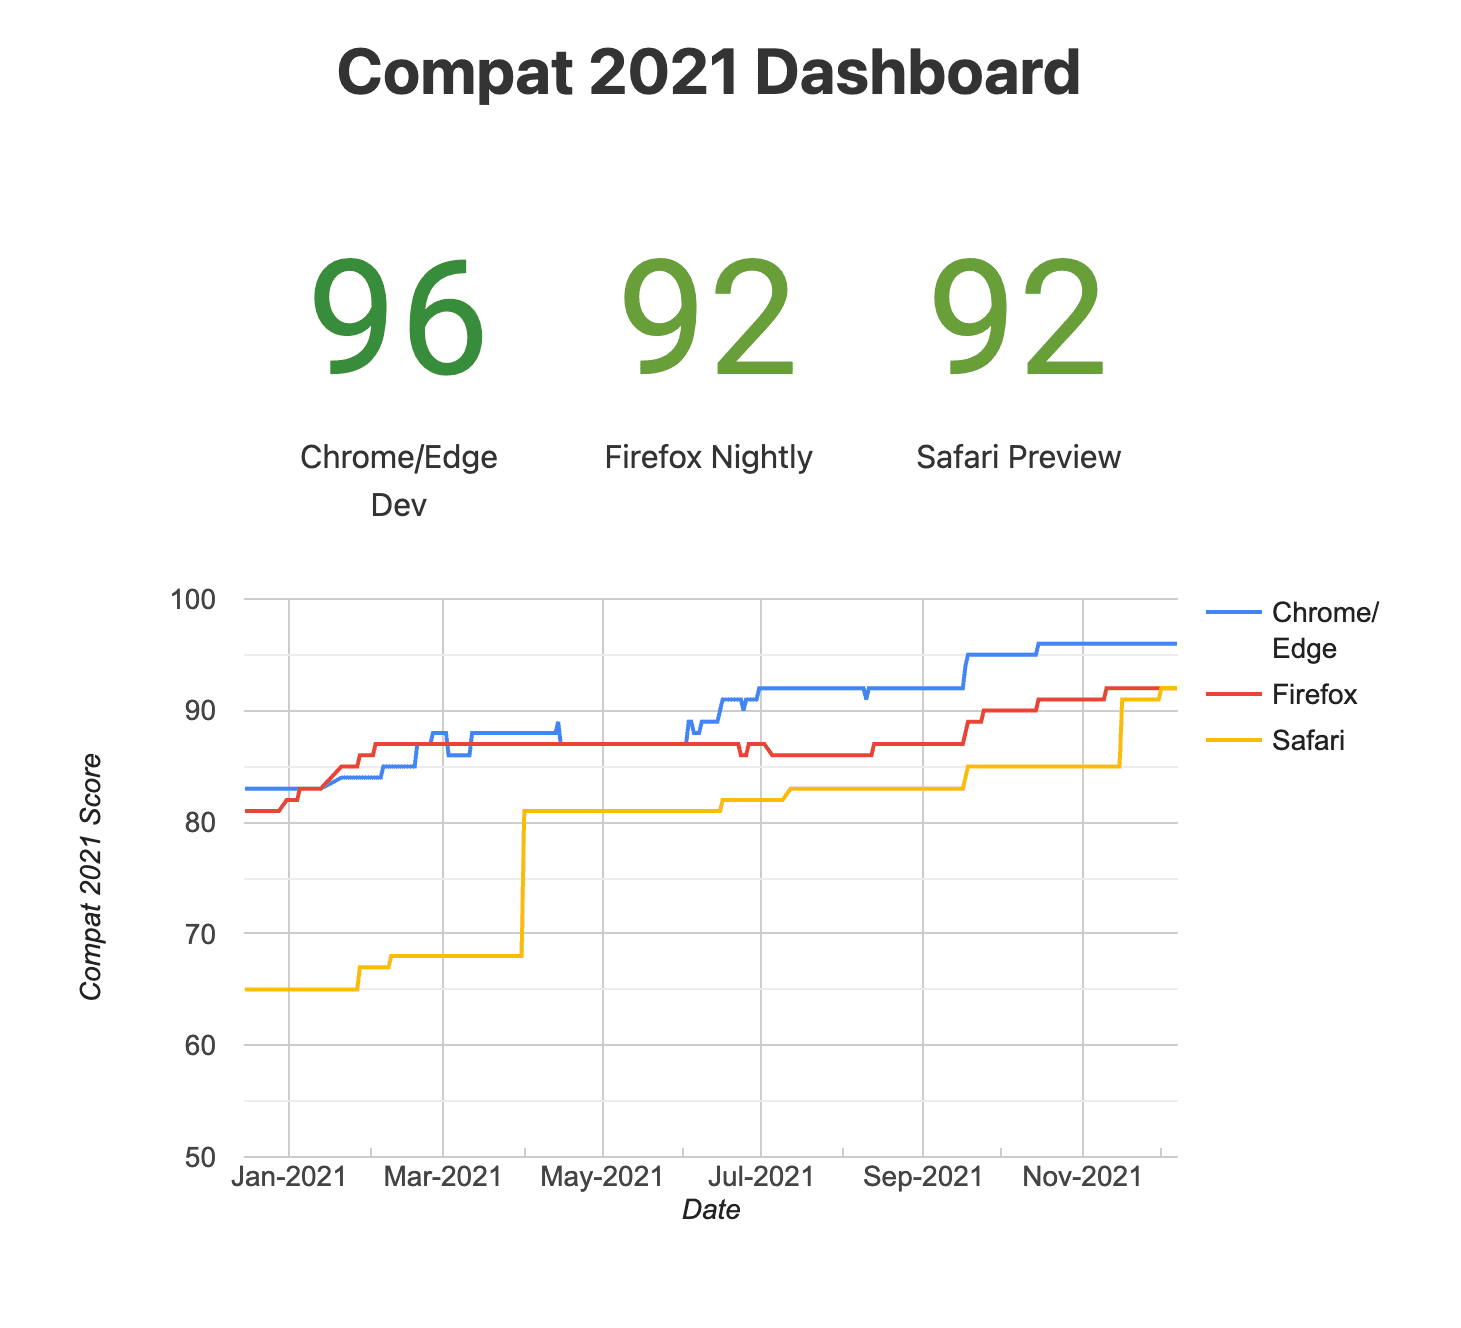 Ein Snapshot des Compat 2021 Dashboards (experimentelle Browser)